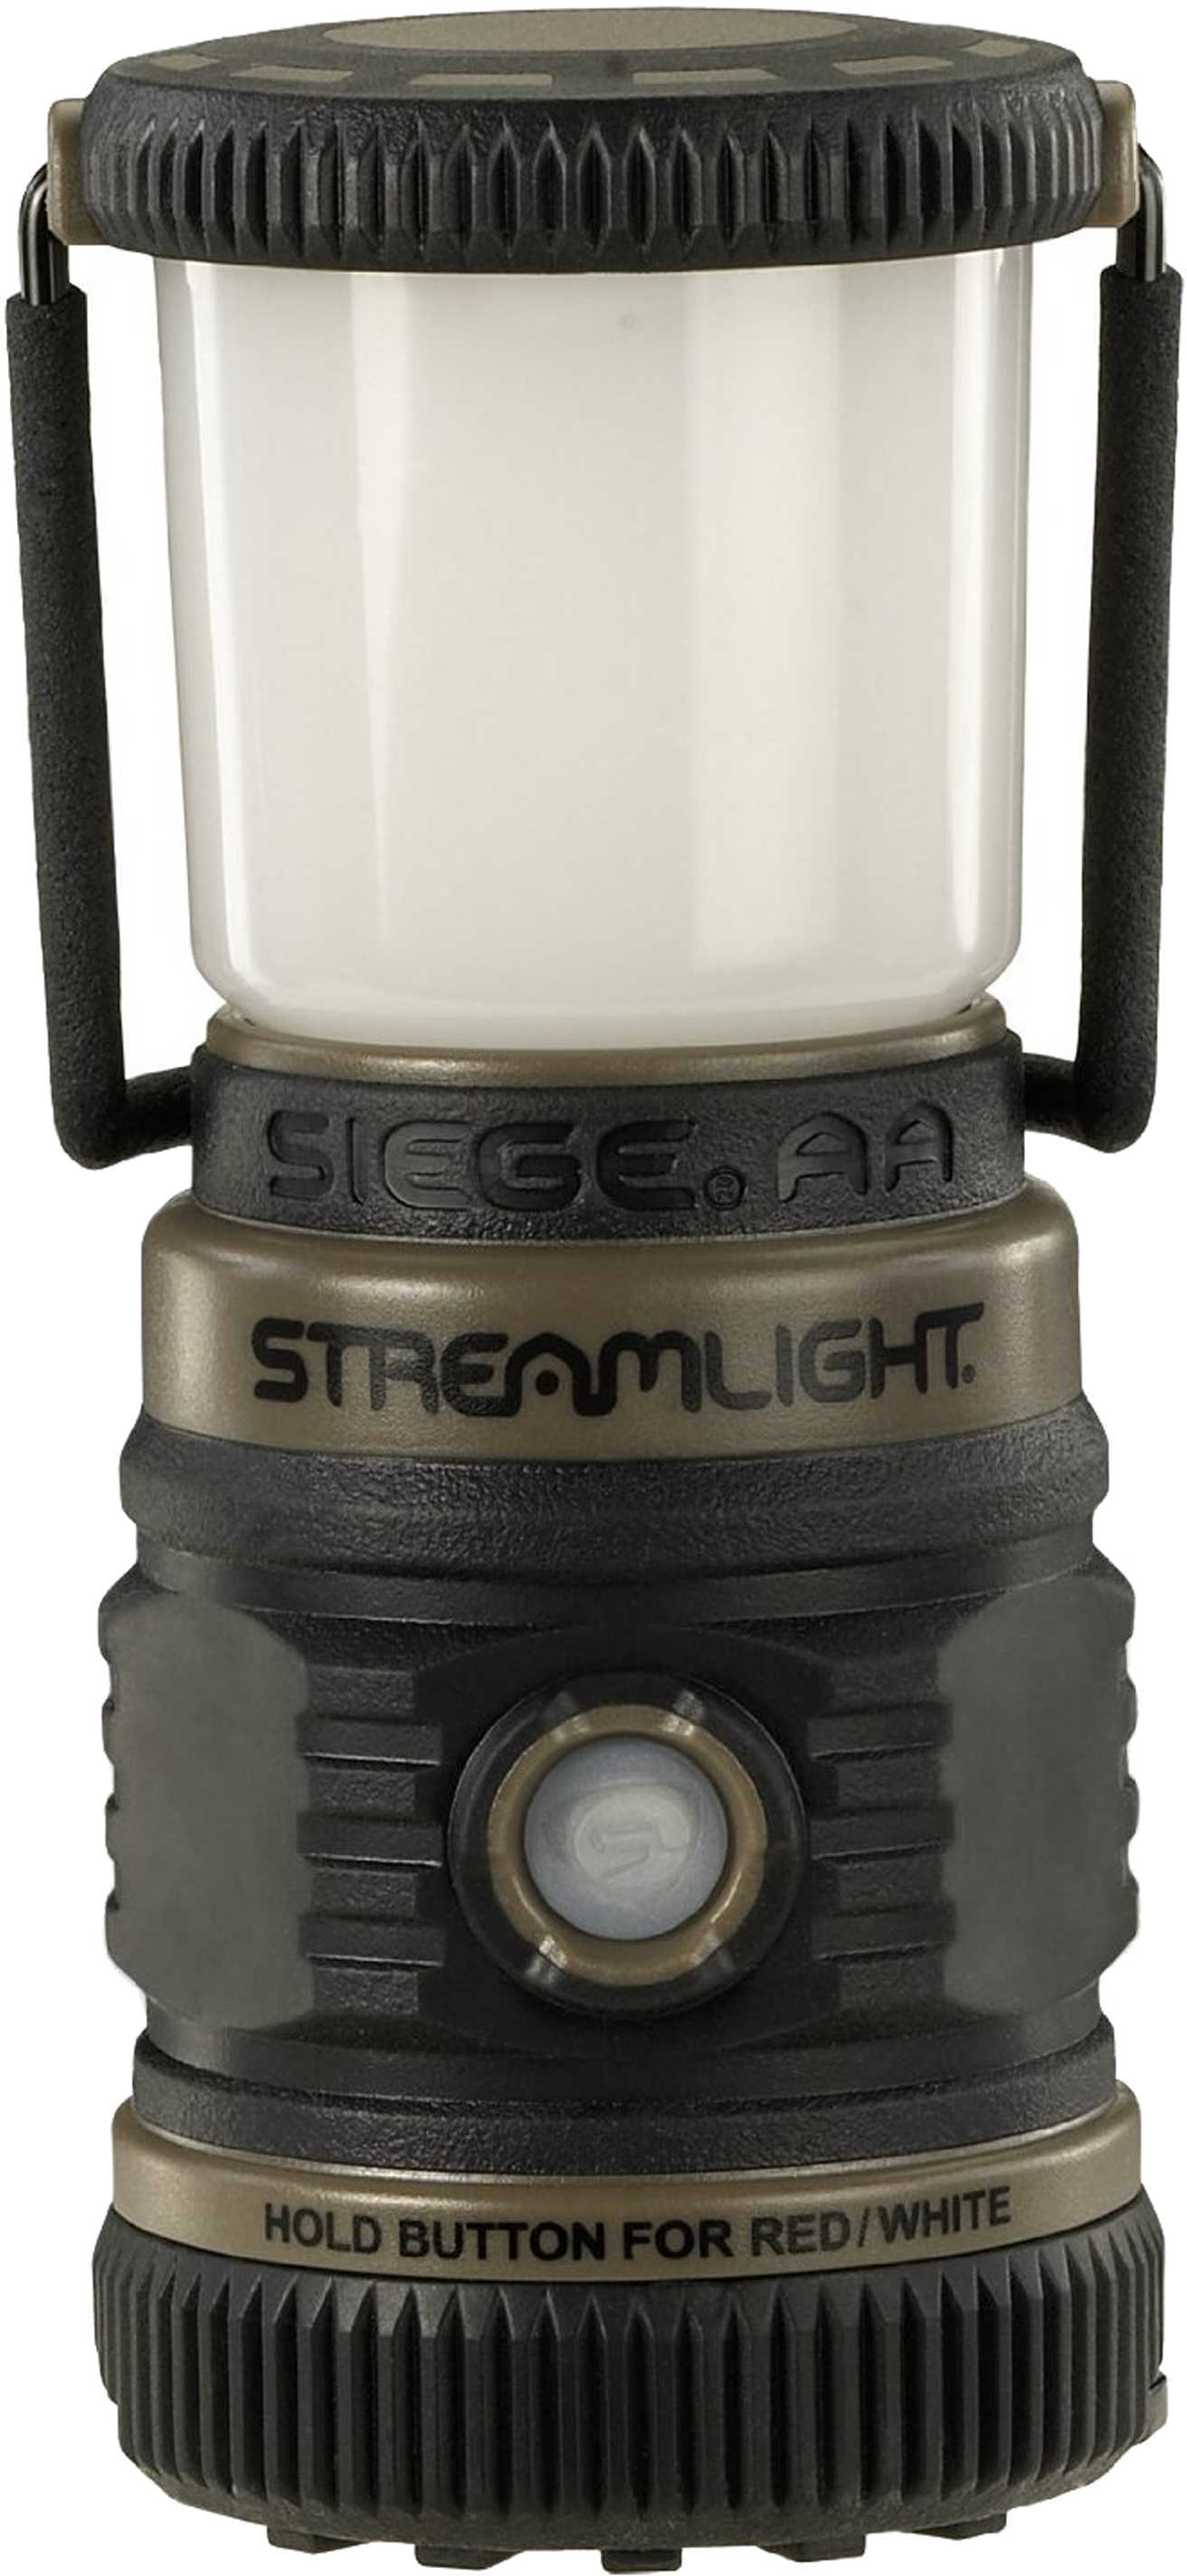 Streamlight Siege AA Led Lantern - Coyote